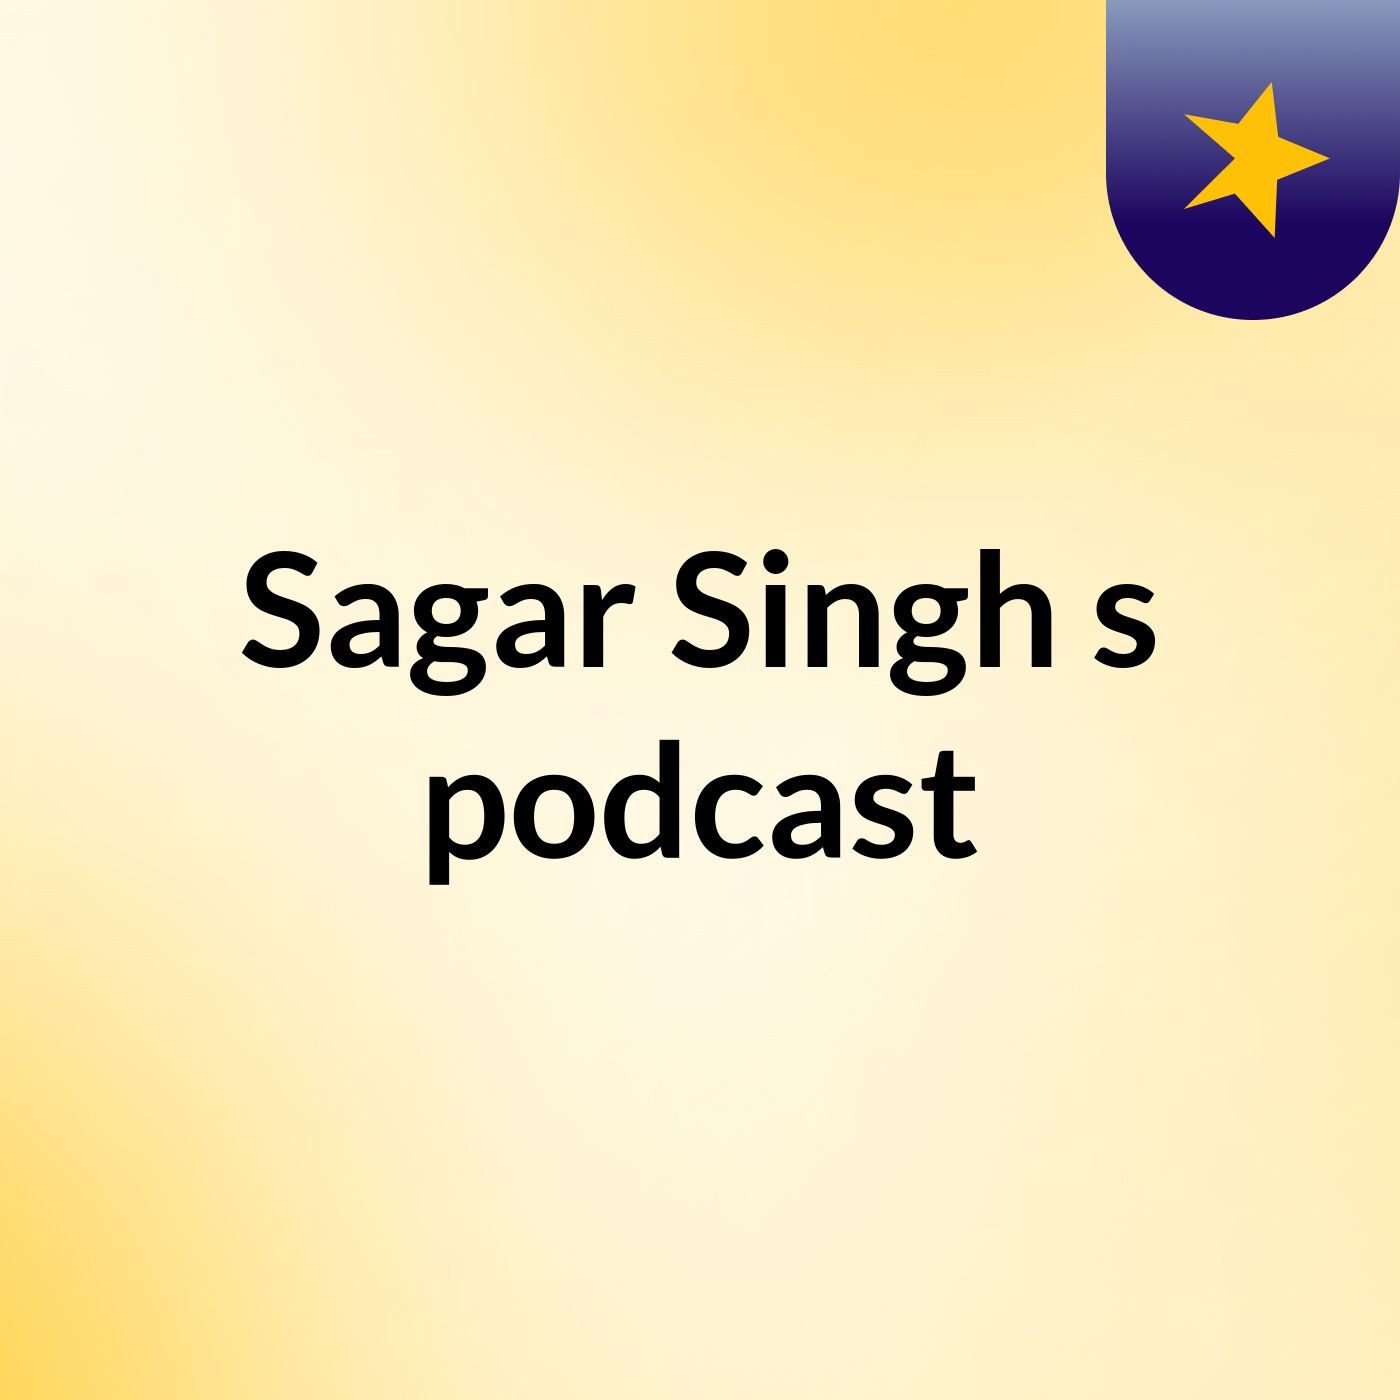 Sagar Singh's podcast